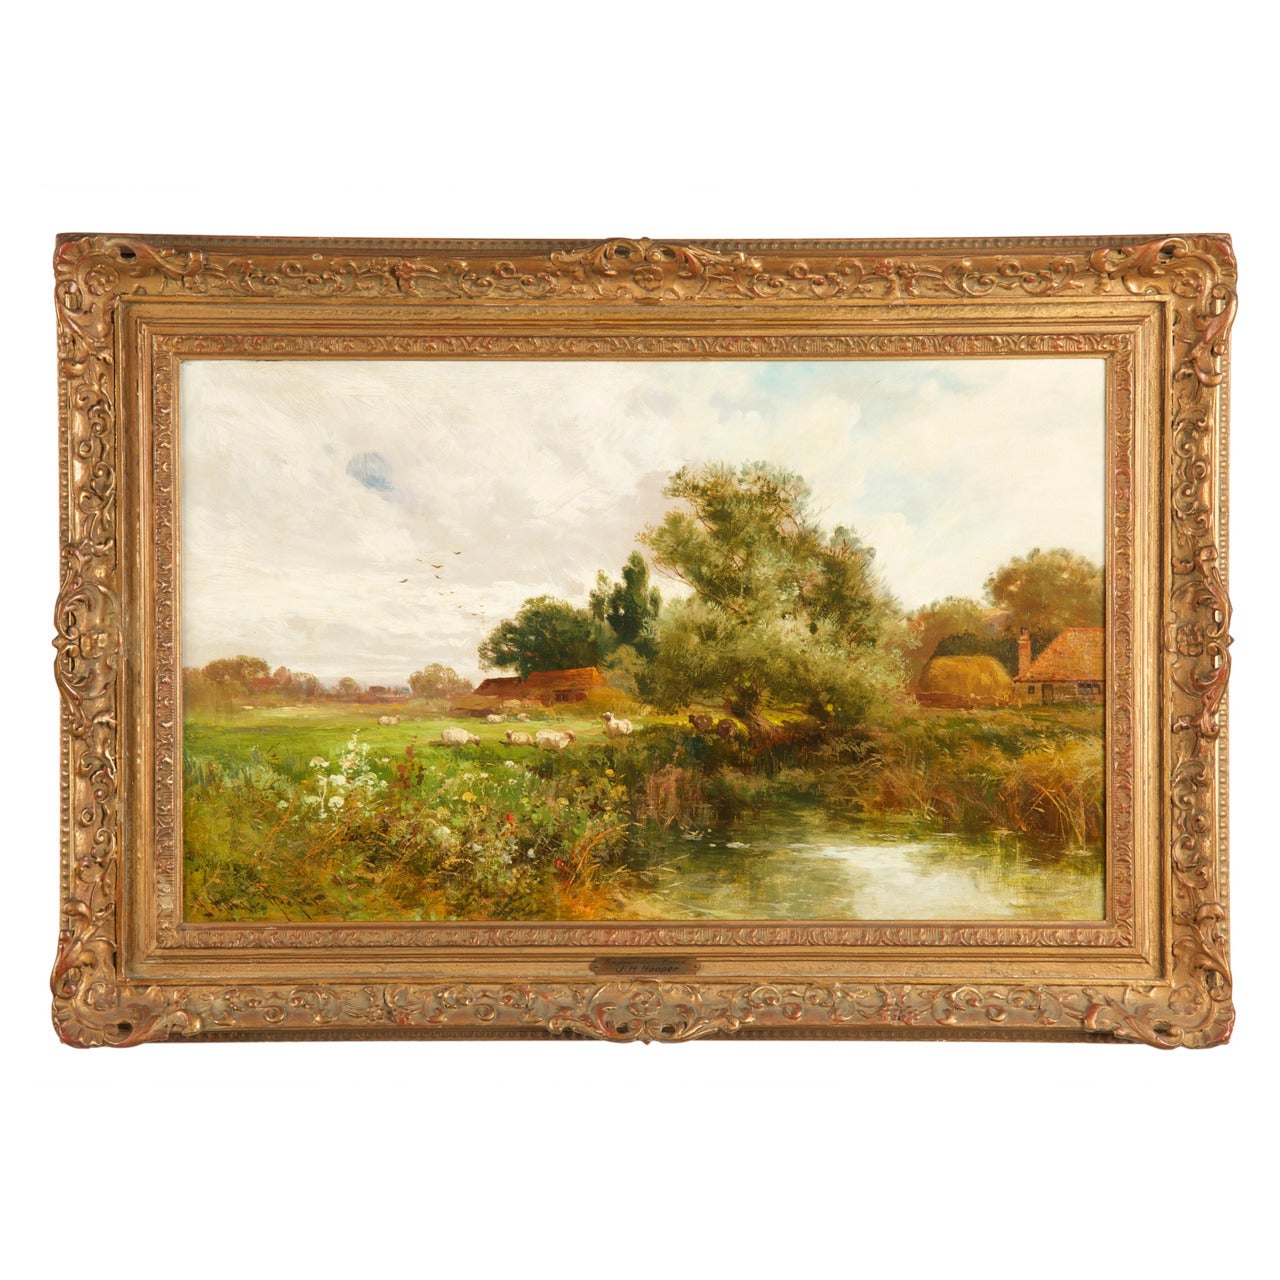 John Horace Hooper (British, fl. 1852-99) Antique Landscape Painting "Saxmunden"